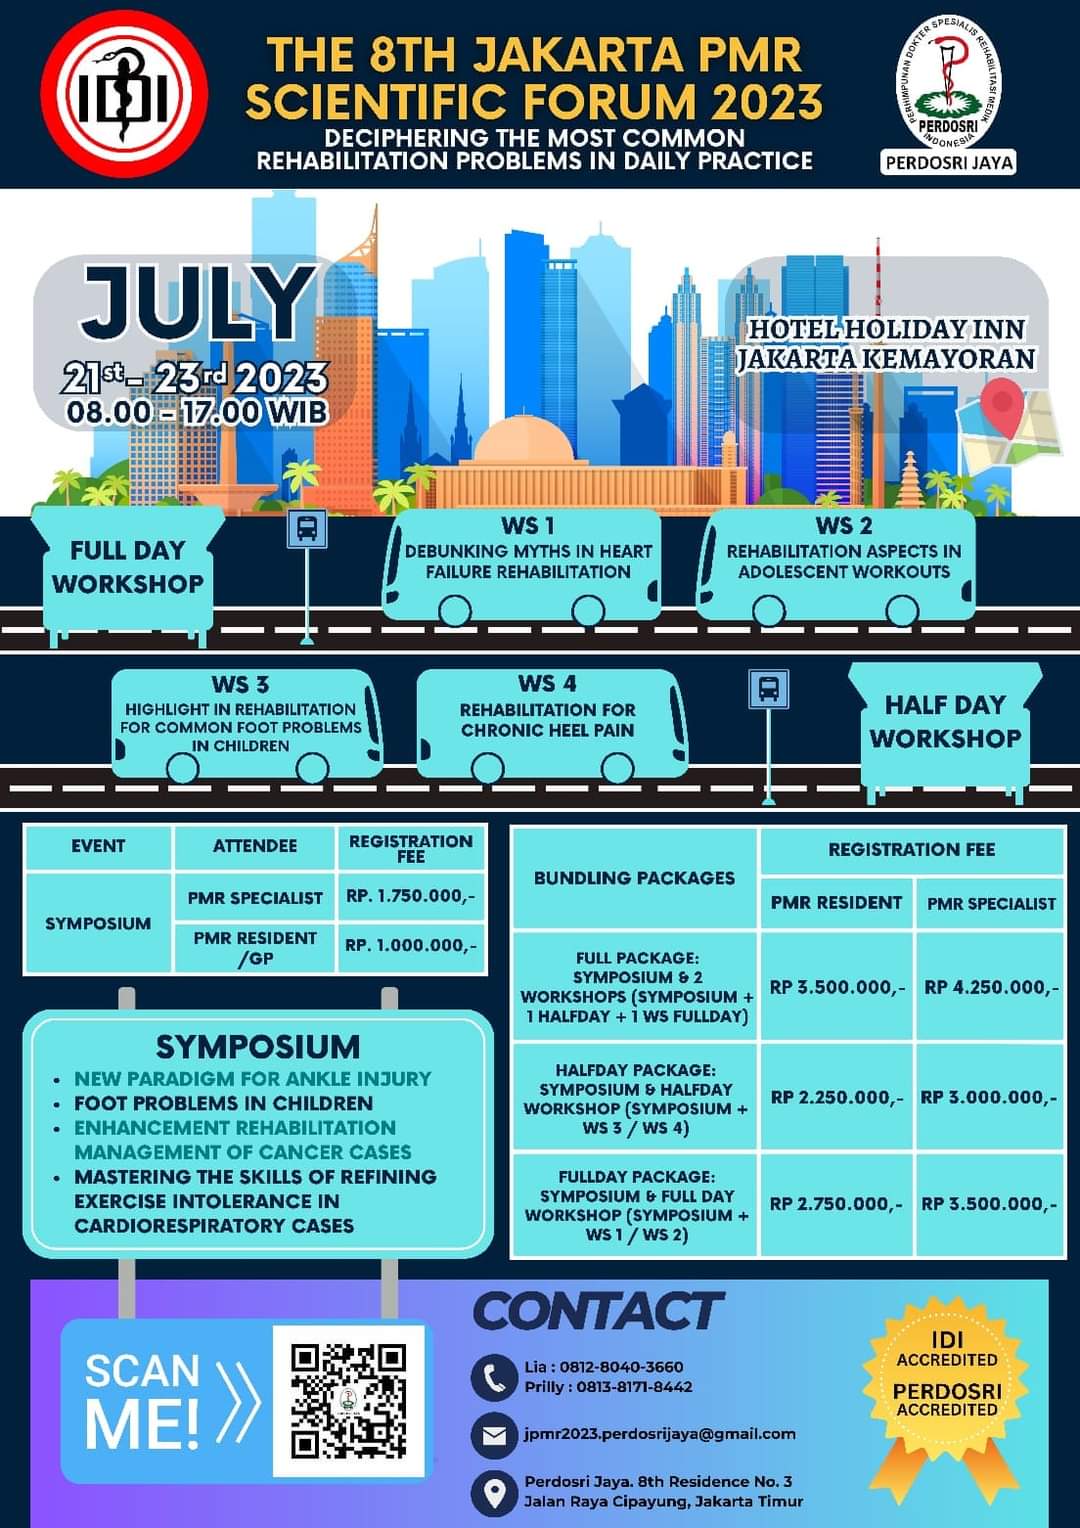 The 8th Jakarta PMR Scientific Forum 2023